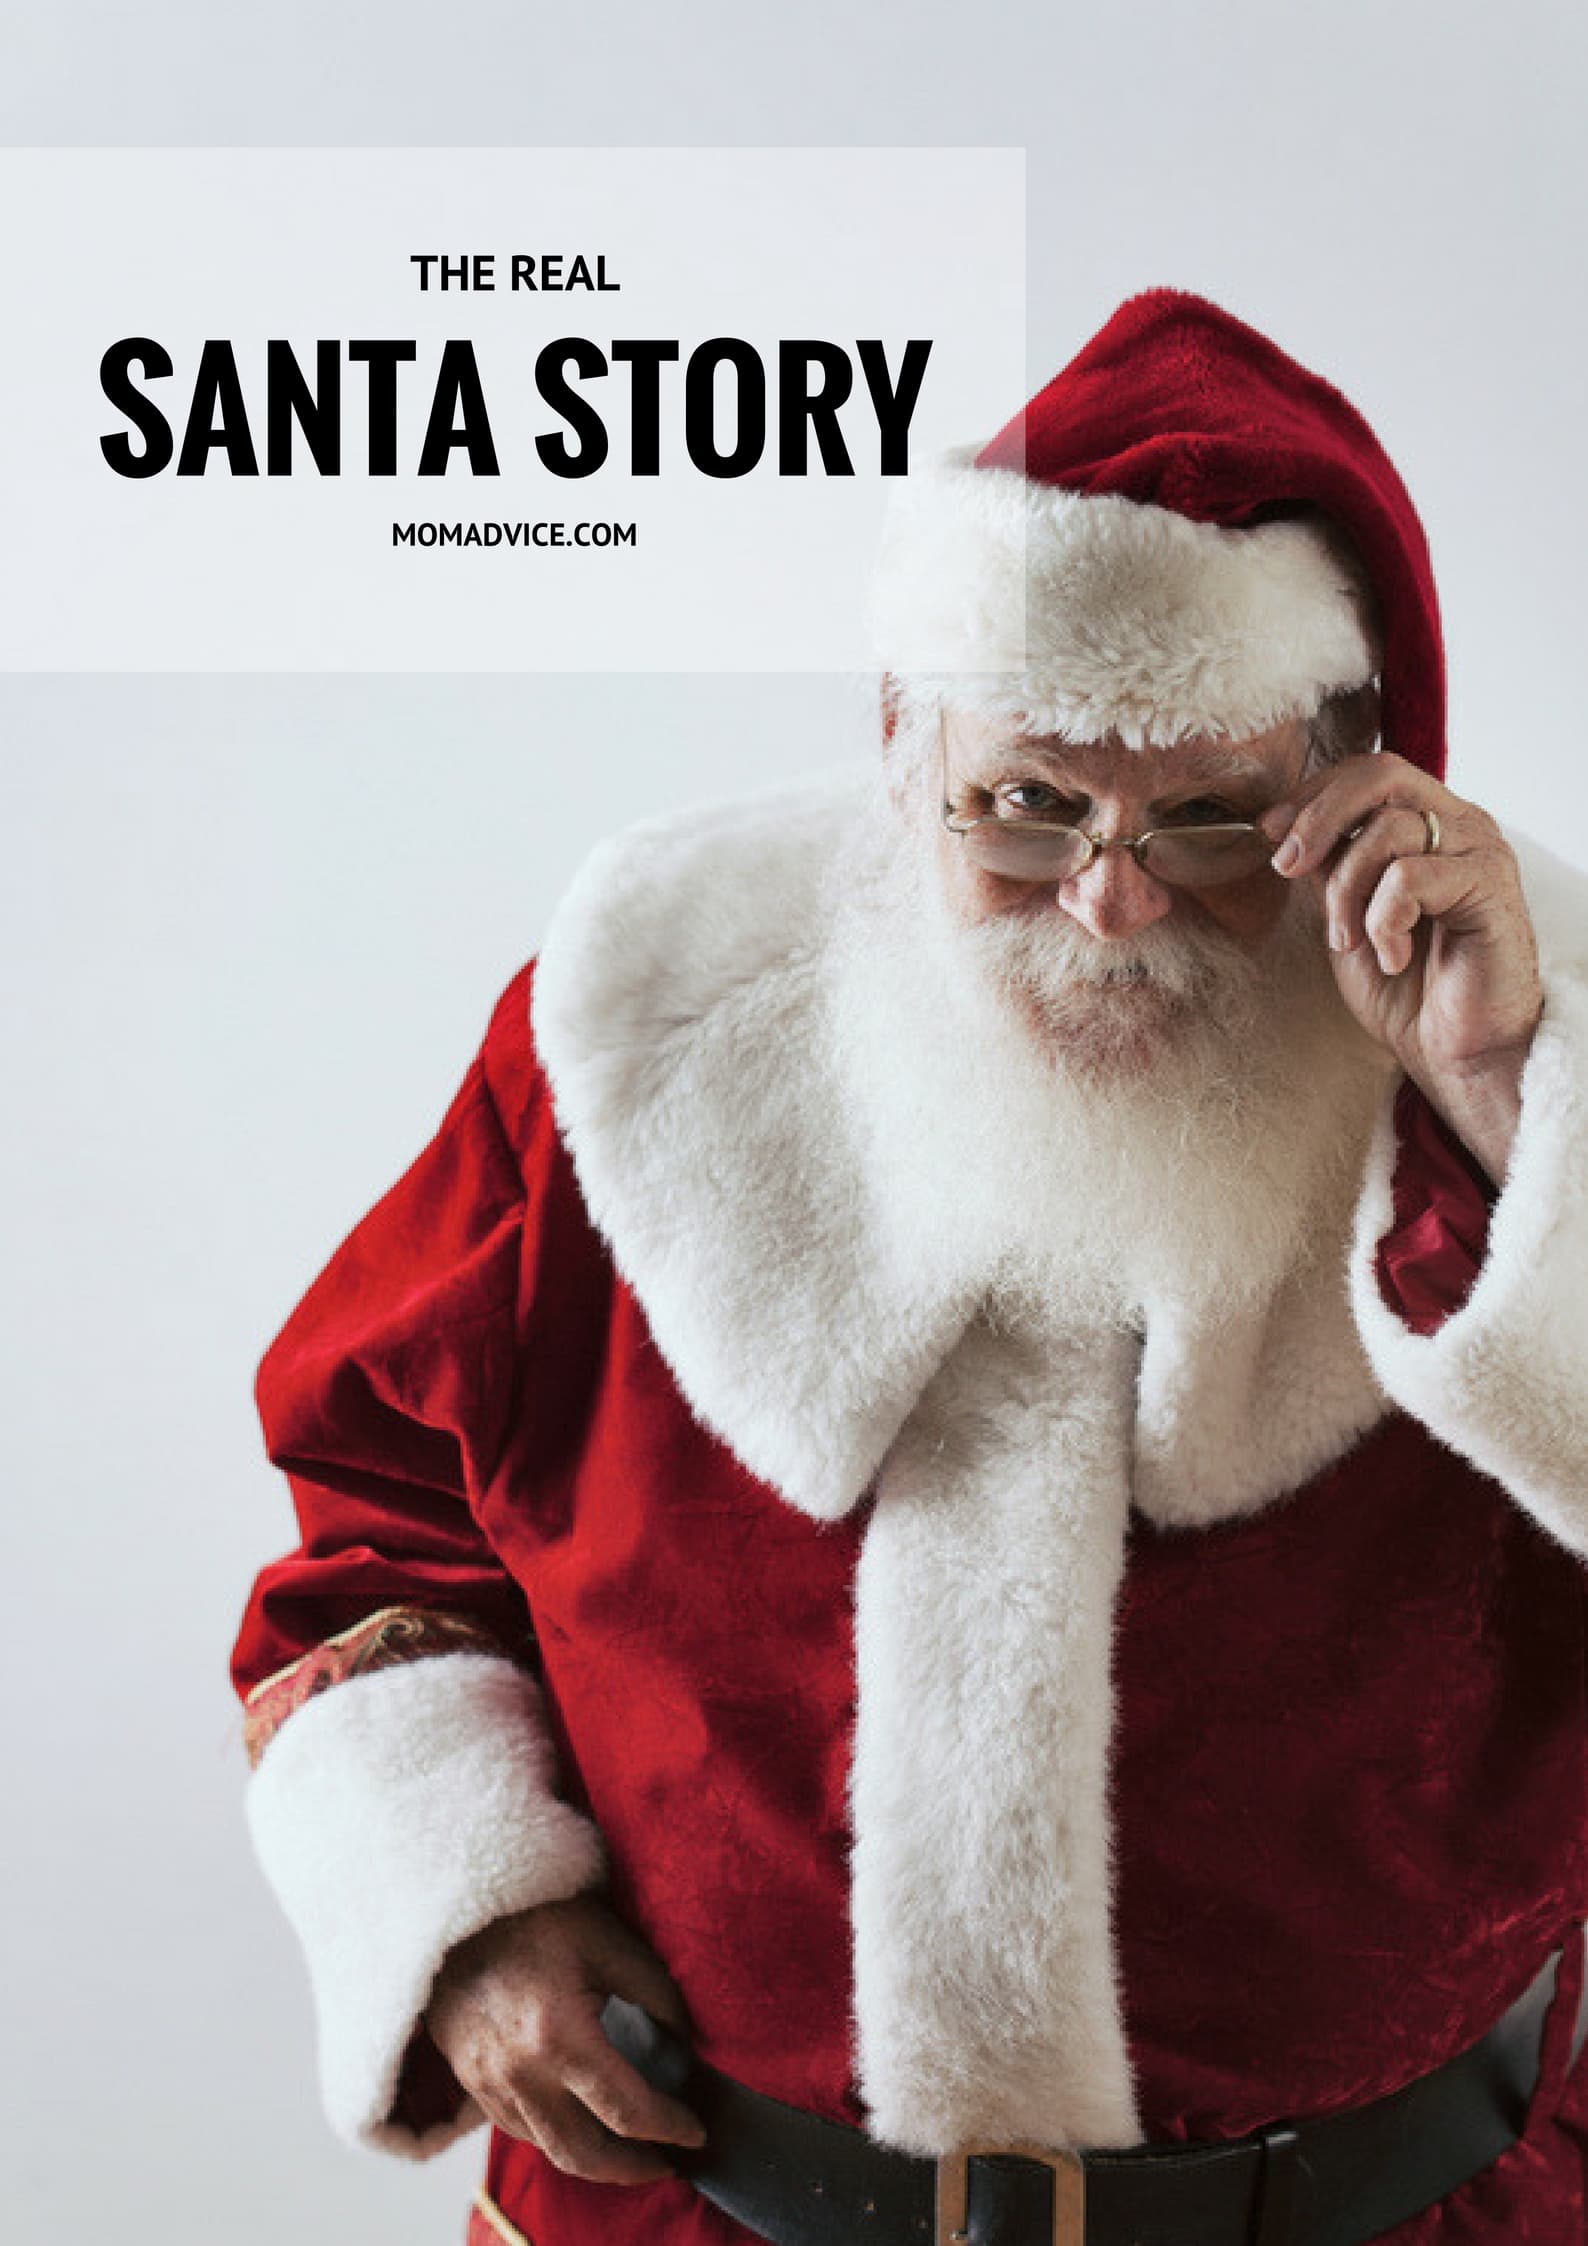 The Real Santa Story from MomAdvice.com